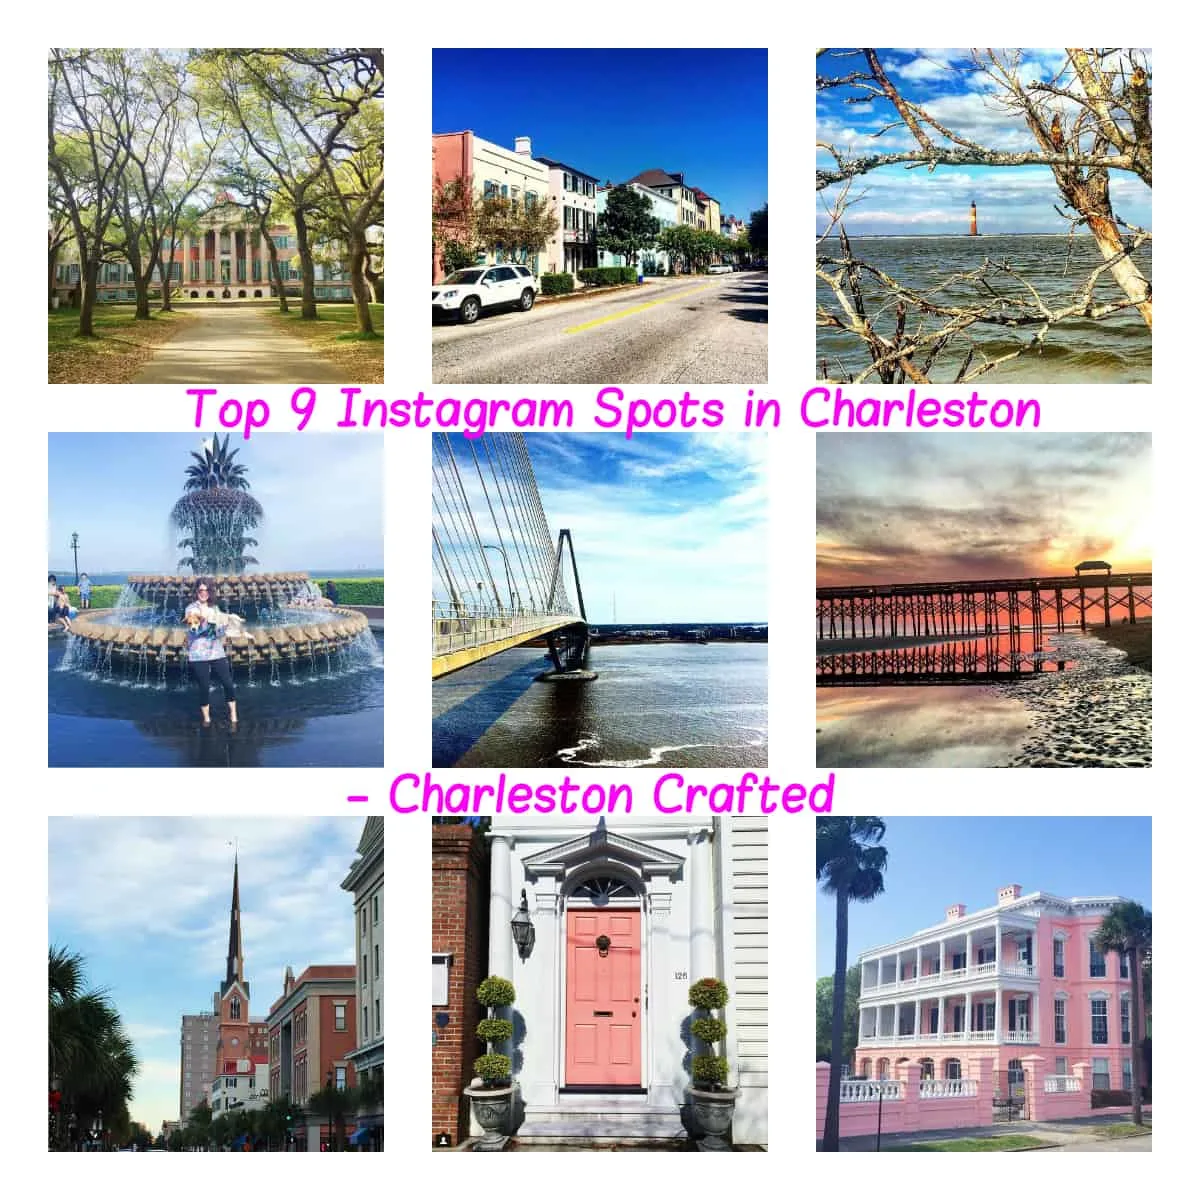 Top 9 Instagram Spots in Charleston - Charleston Crafted